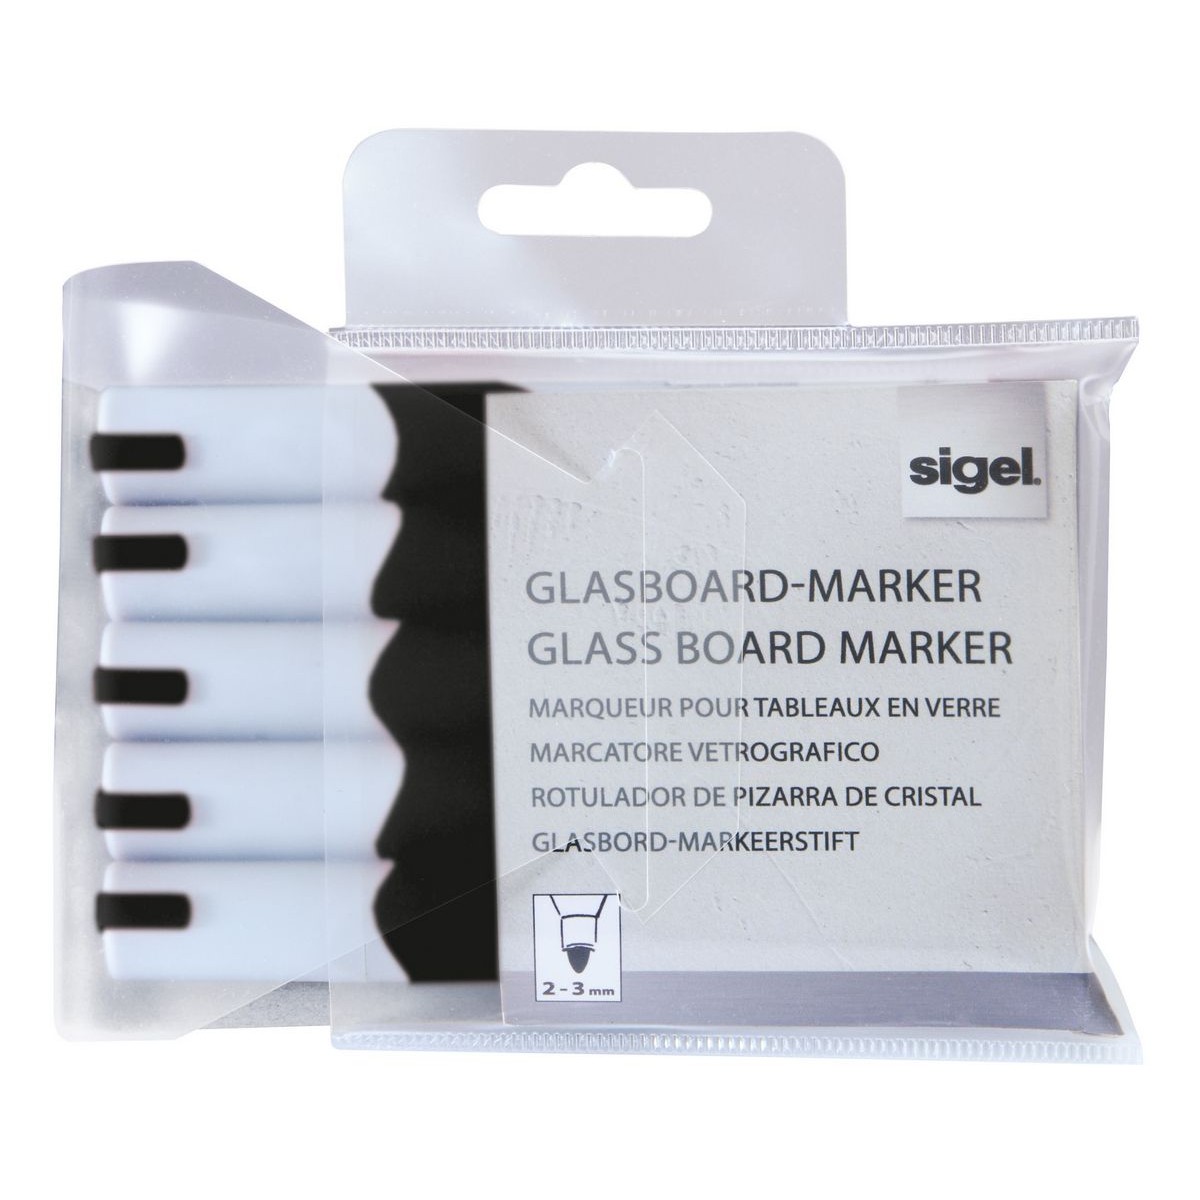 GL710 - Sigel - Marcatore per lavagne di vetro, punta tonda 2-3 mm - Nero